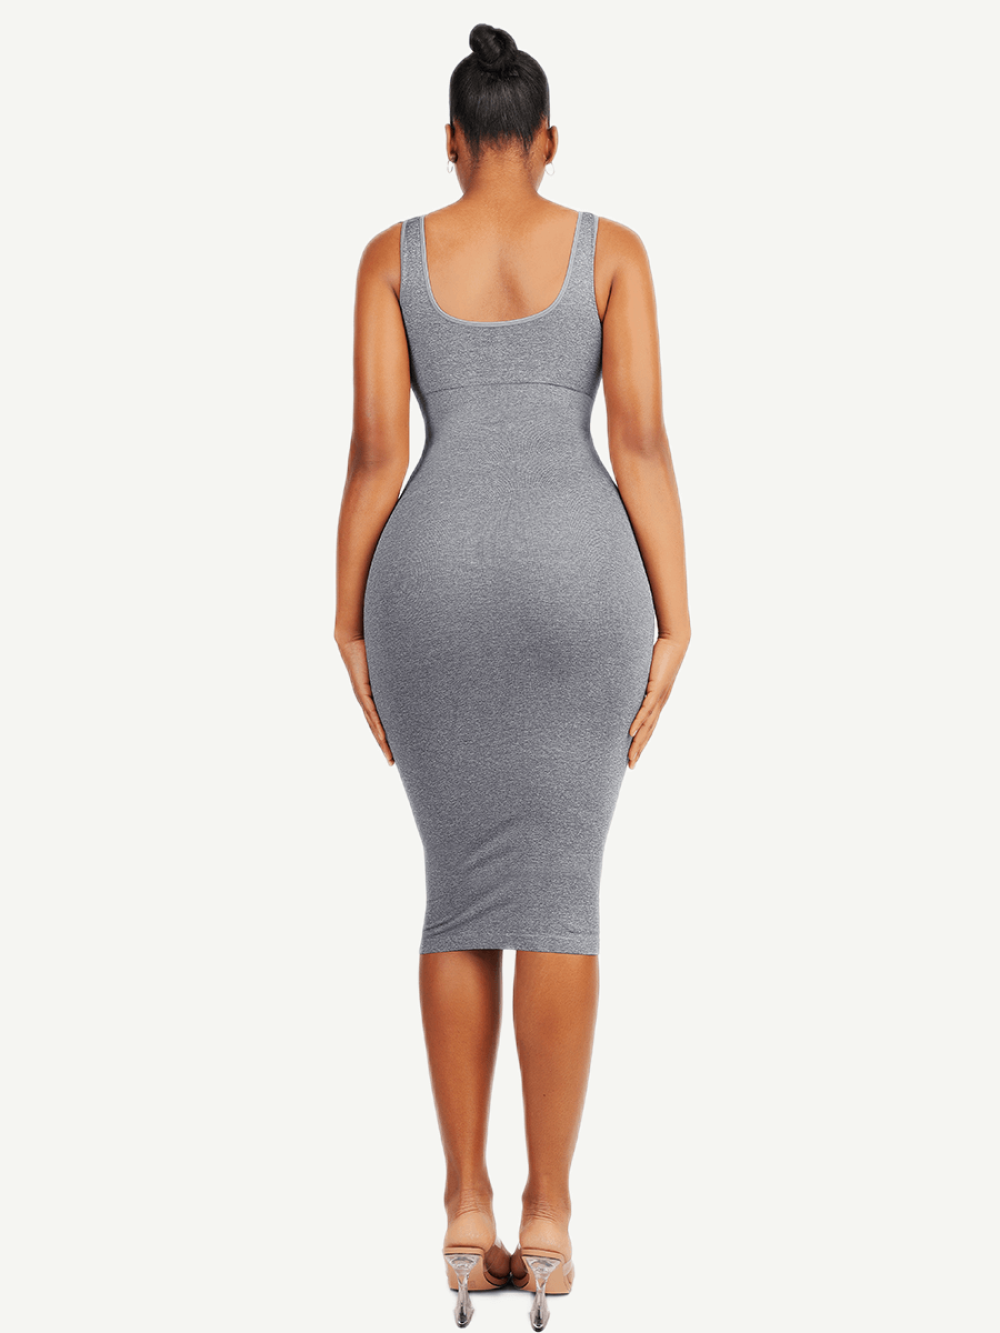 Fashion Seamless Modal Shaper Large U-back Dress